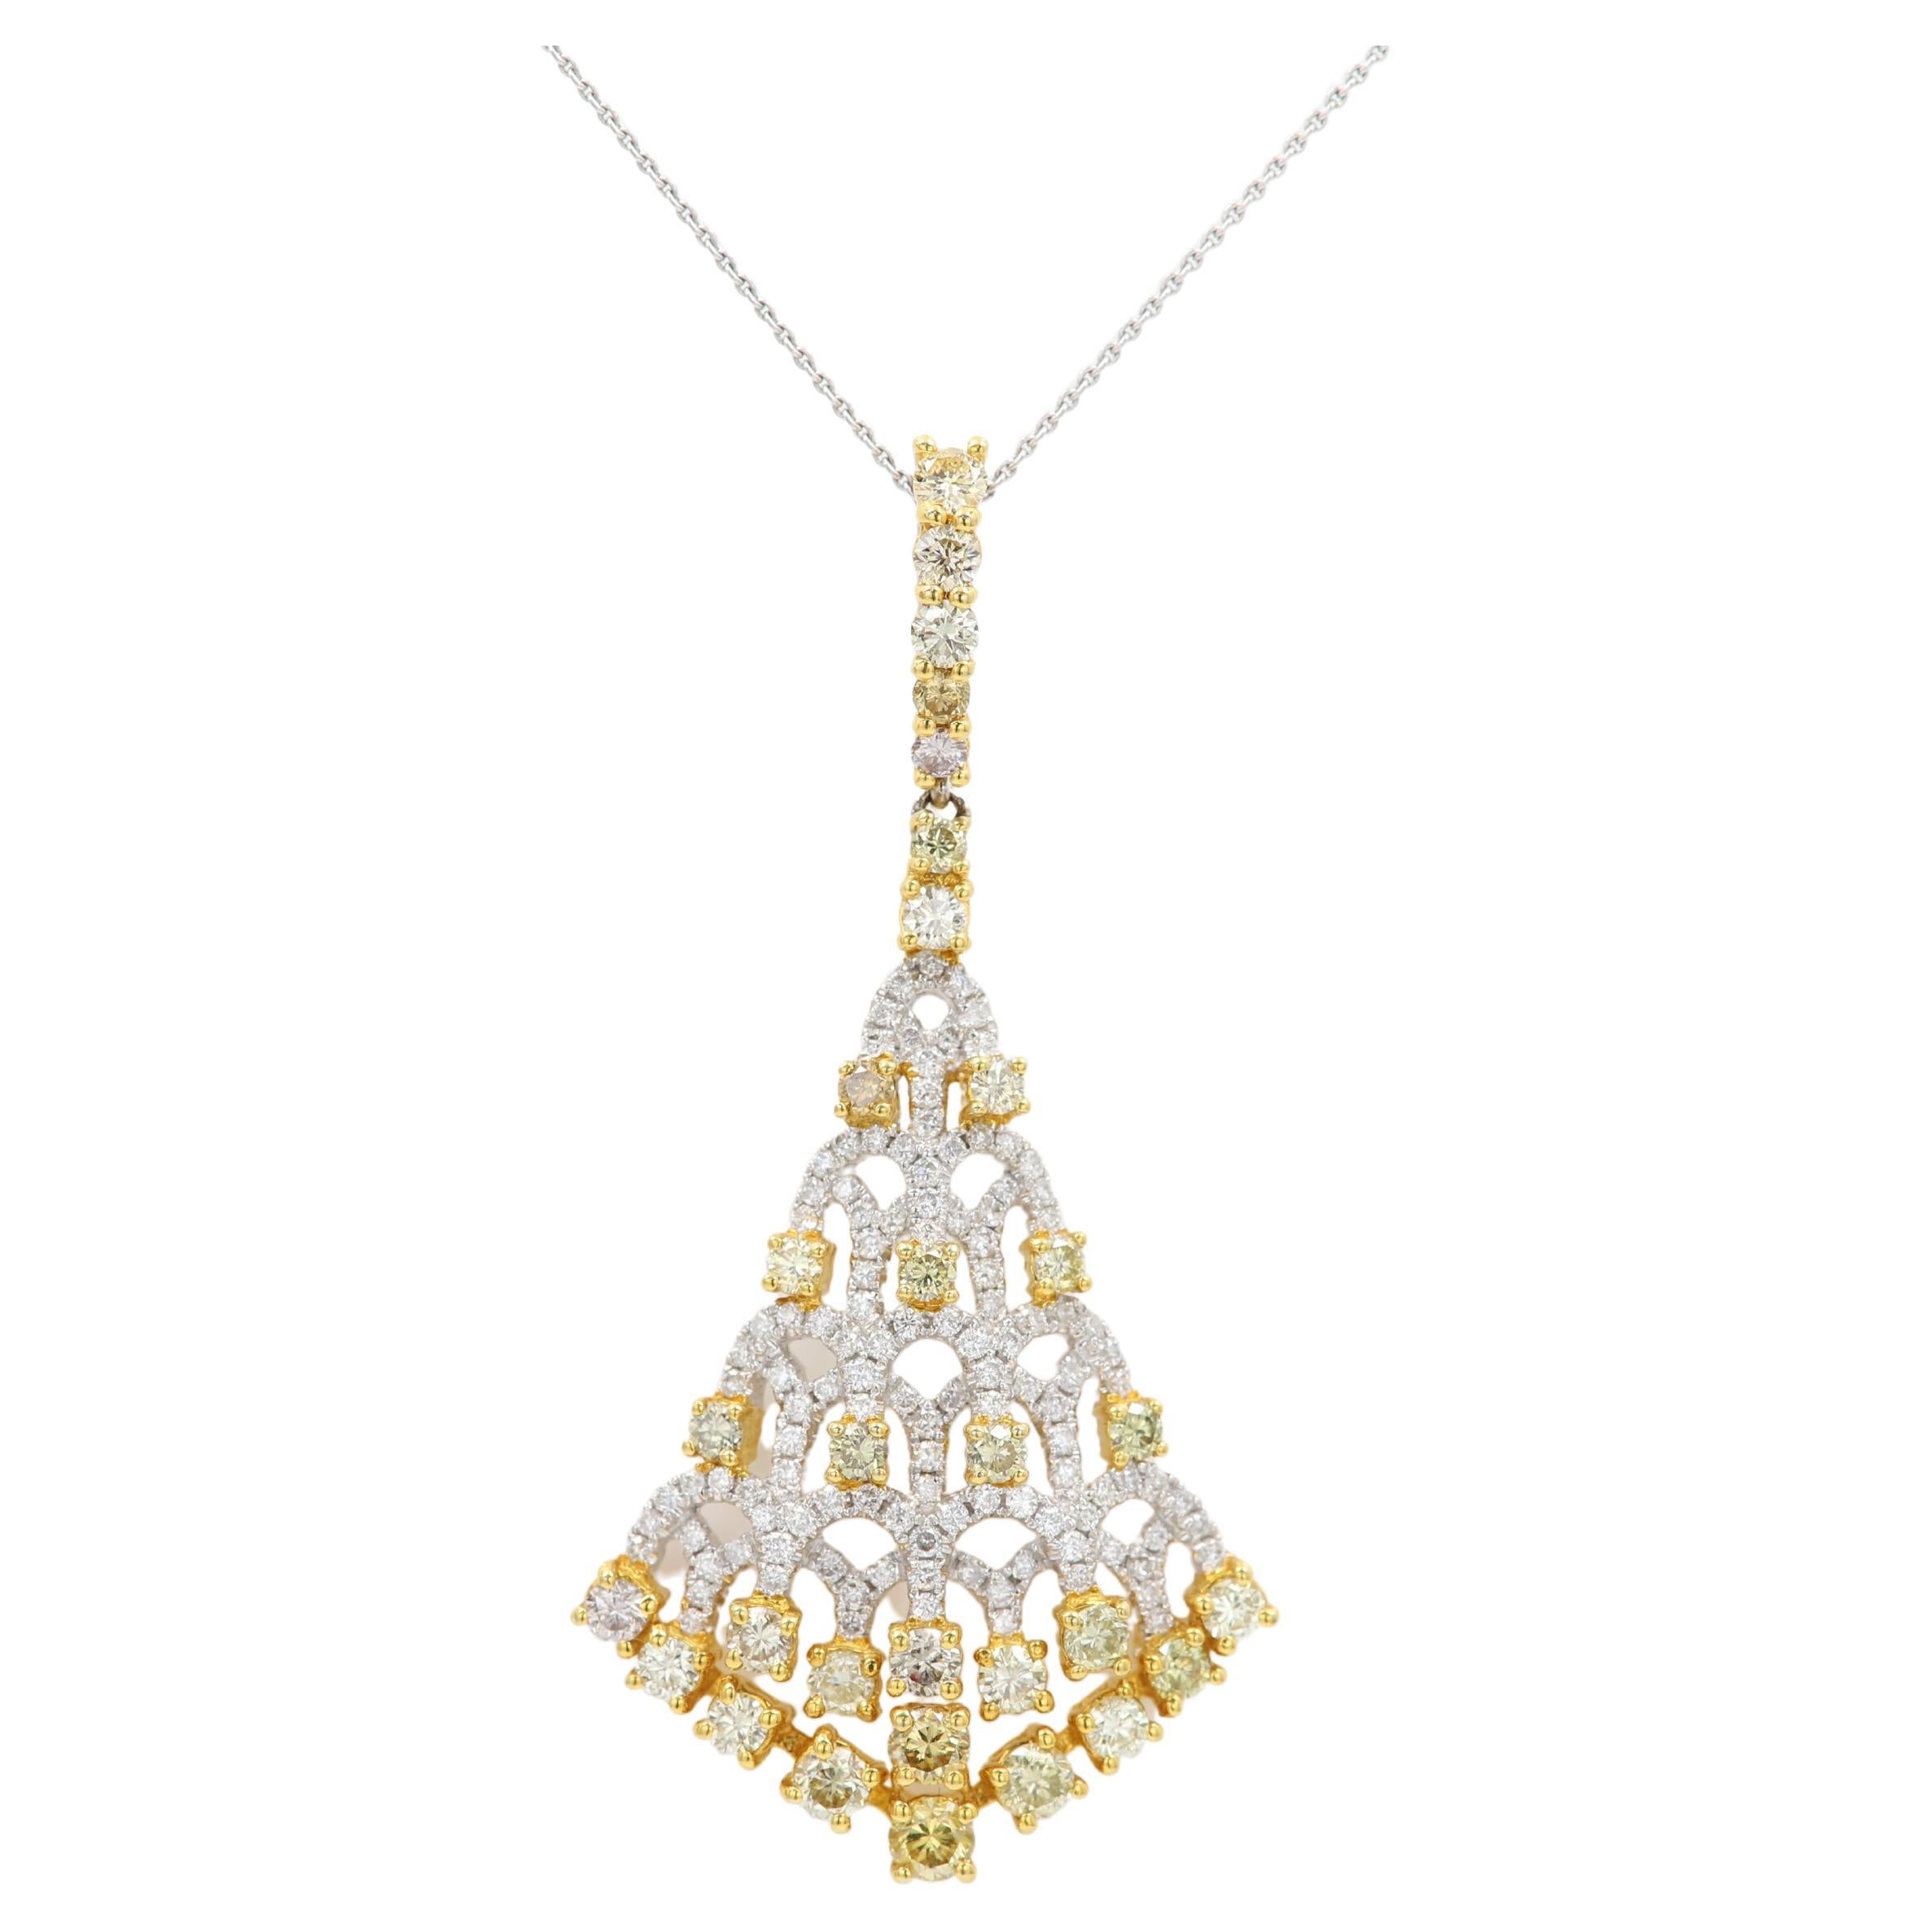 Dangle Yellow Diamond Pendant Necklace 18 Karat White and Yellow Gold 